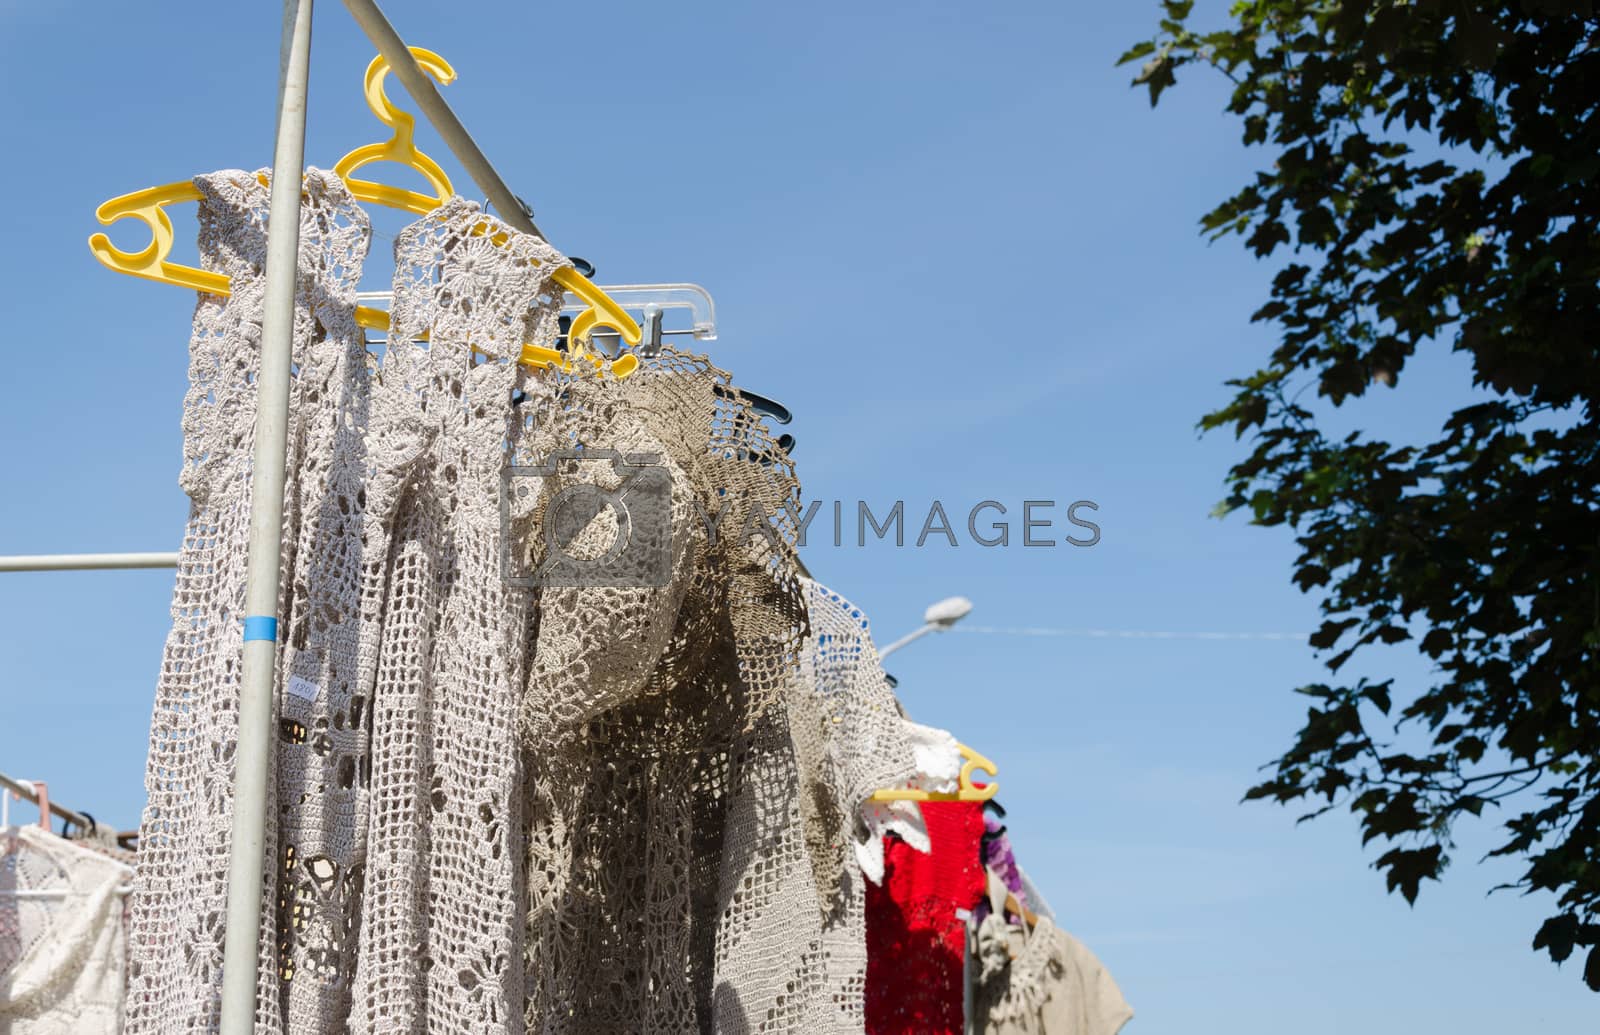 Royalty free image of crocheted linen ladies blouses hang in fair by sauletas